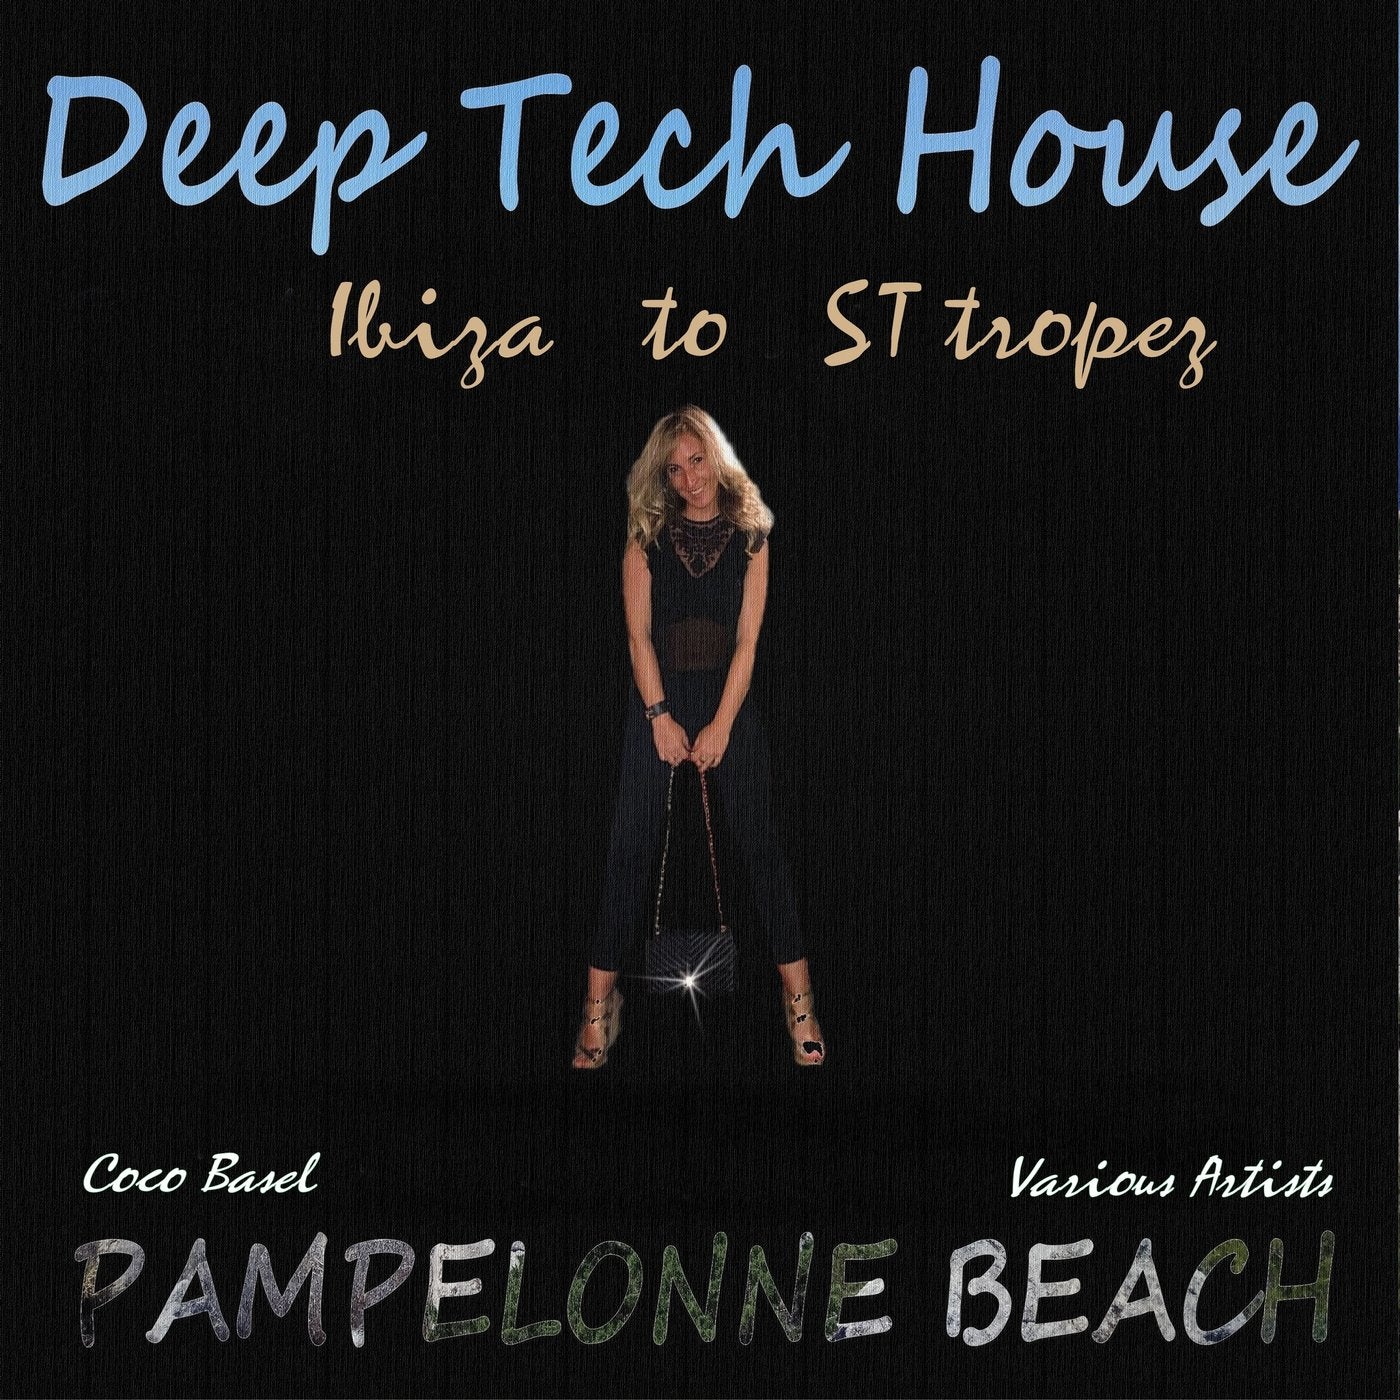 Pampelonne Beach: Deep Tech House - Ibiza to St. Tropez